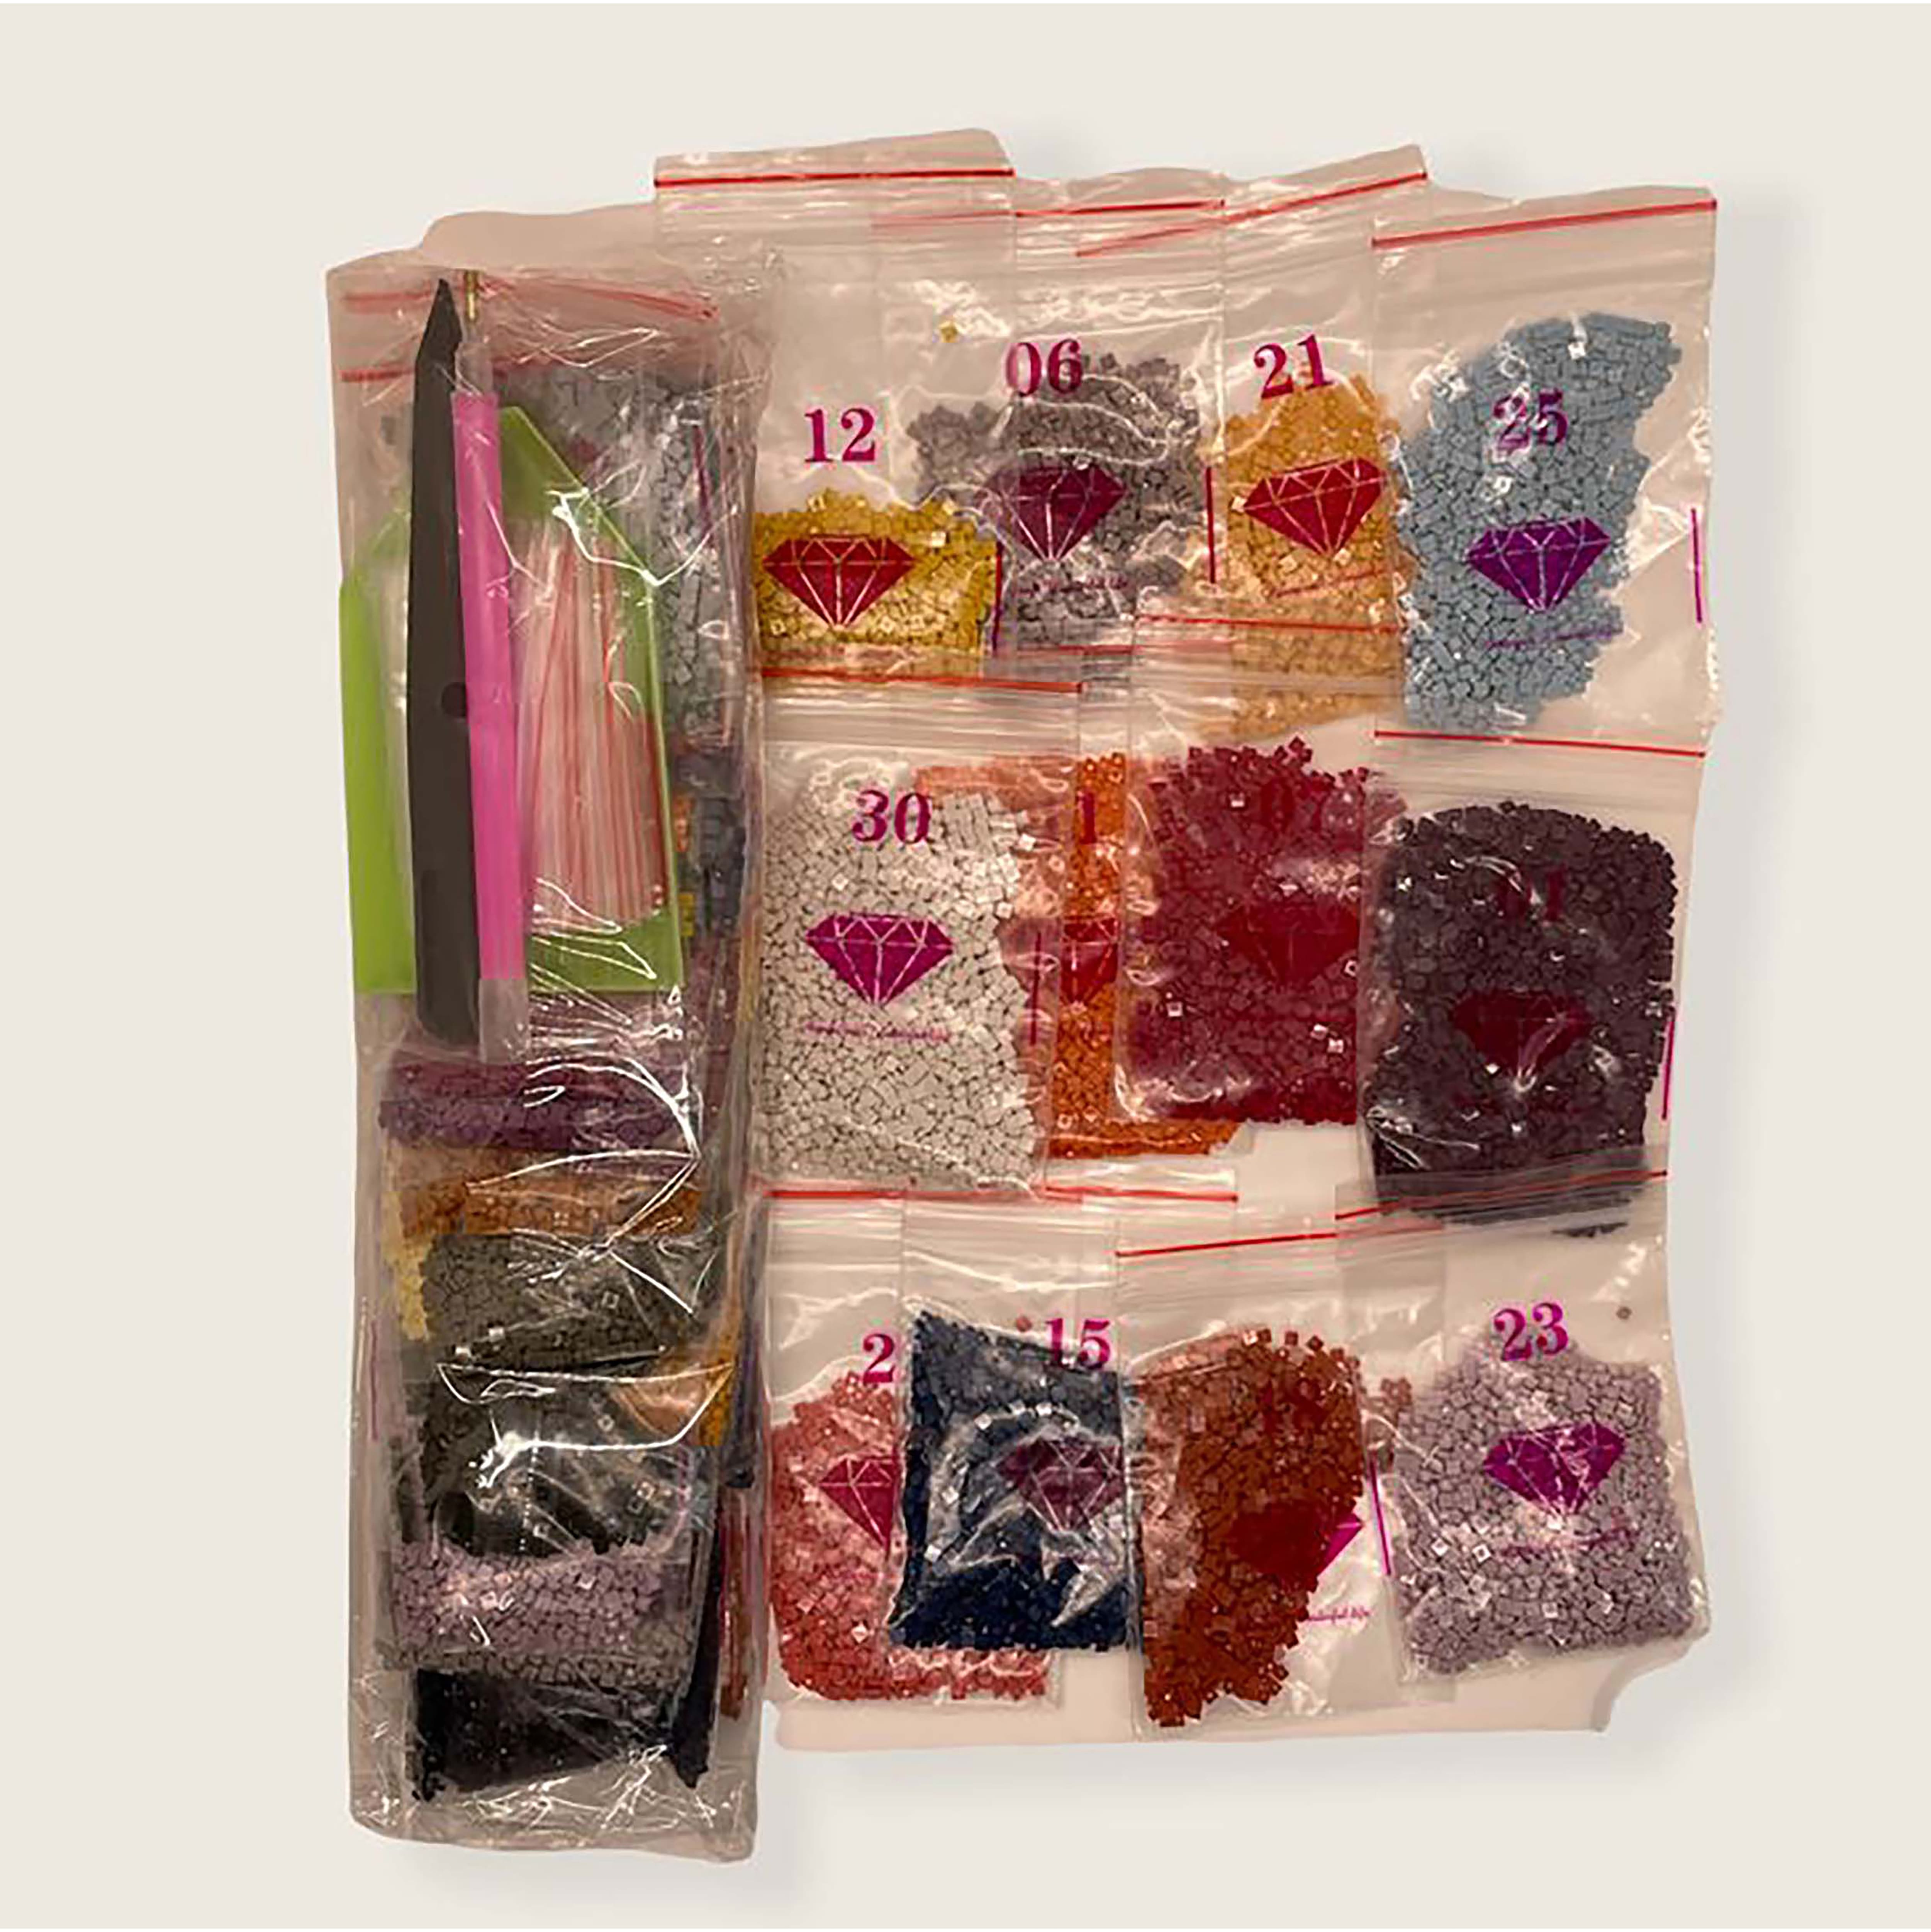 Sparkly Selections Piglet Eating Ice Cream Diamond Painting Kit, Round Diamonds